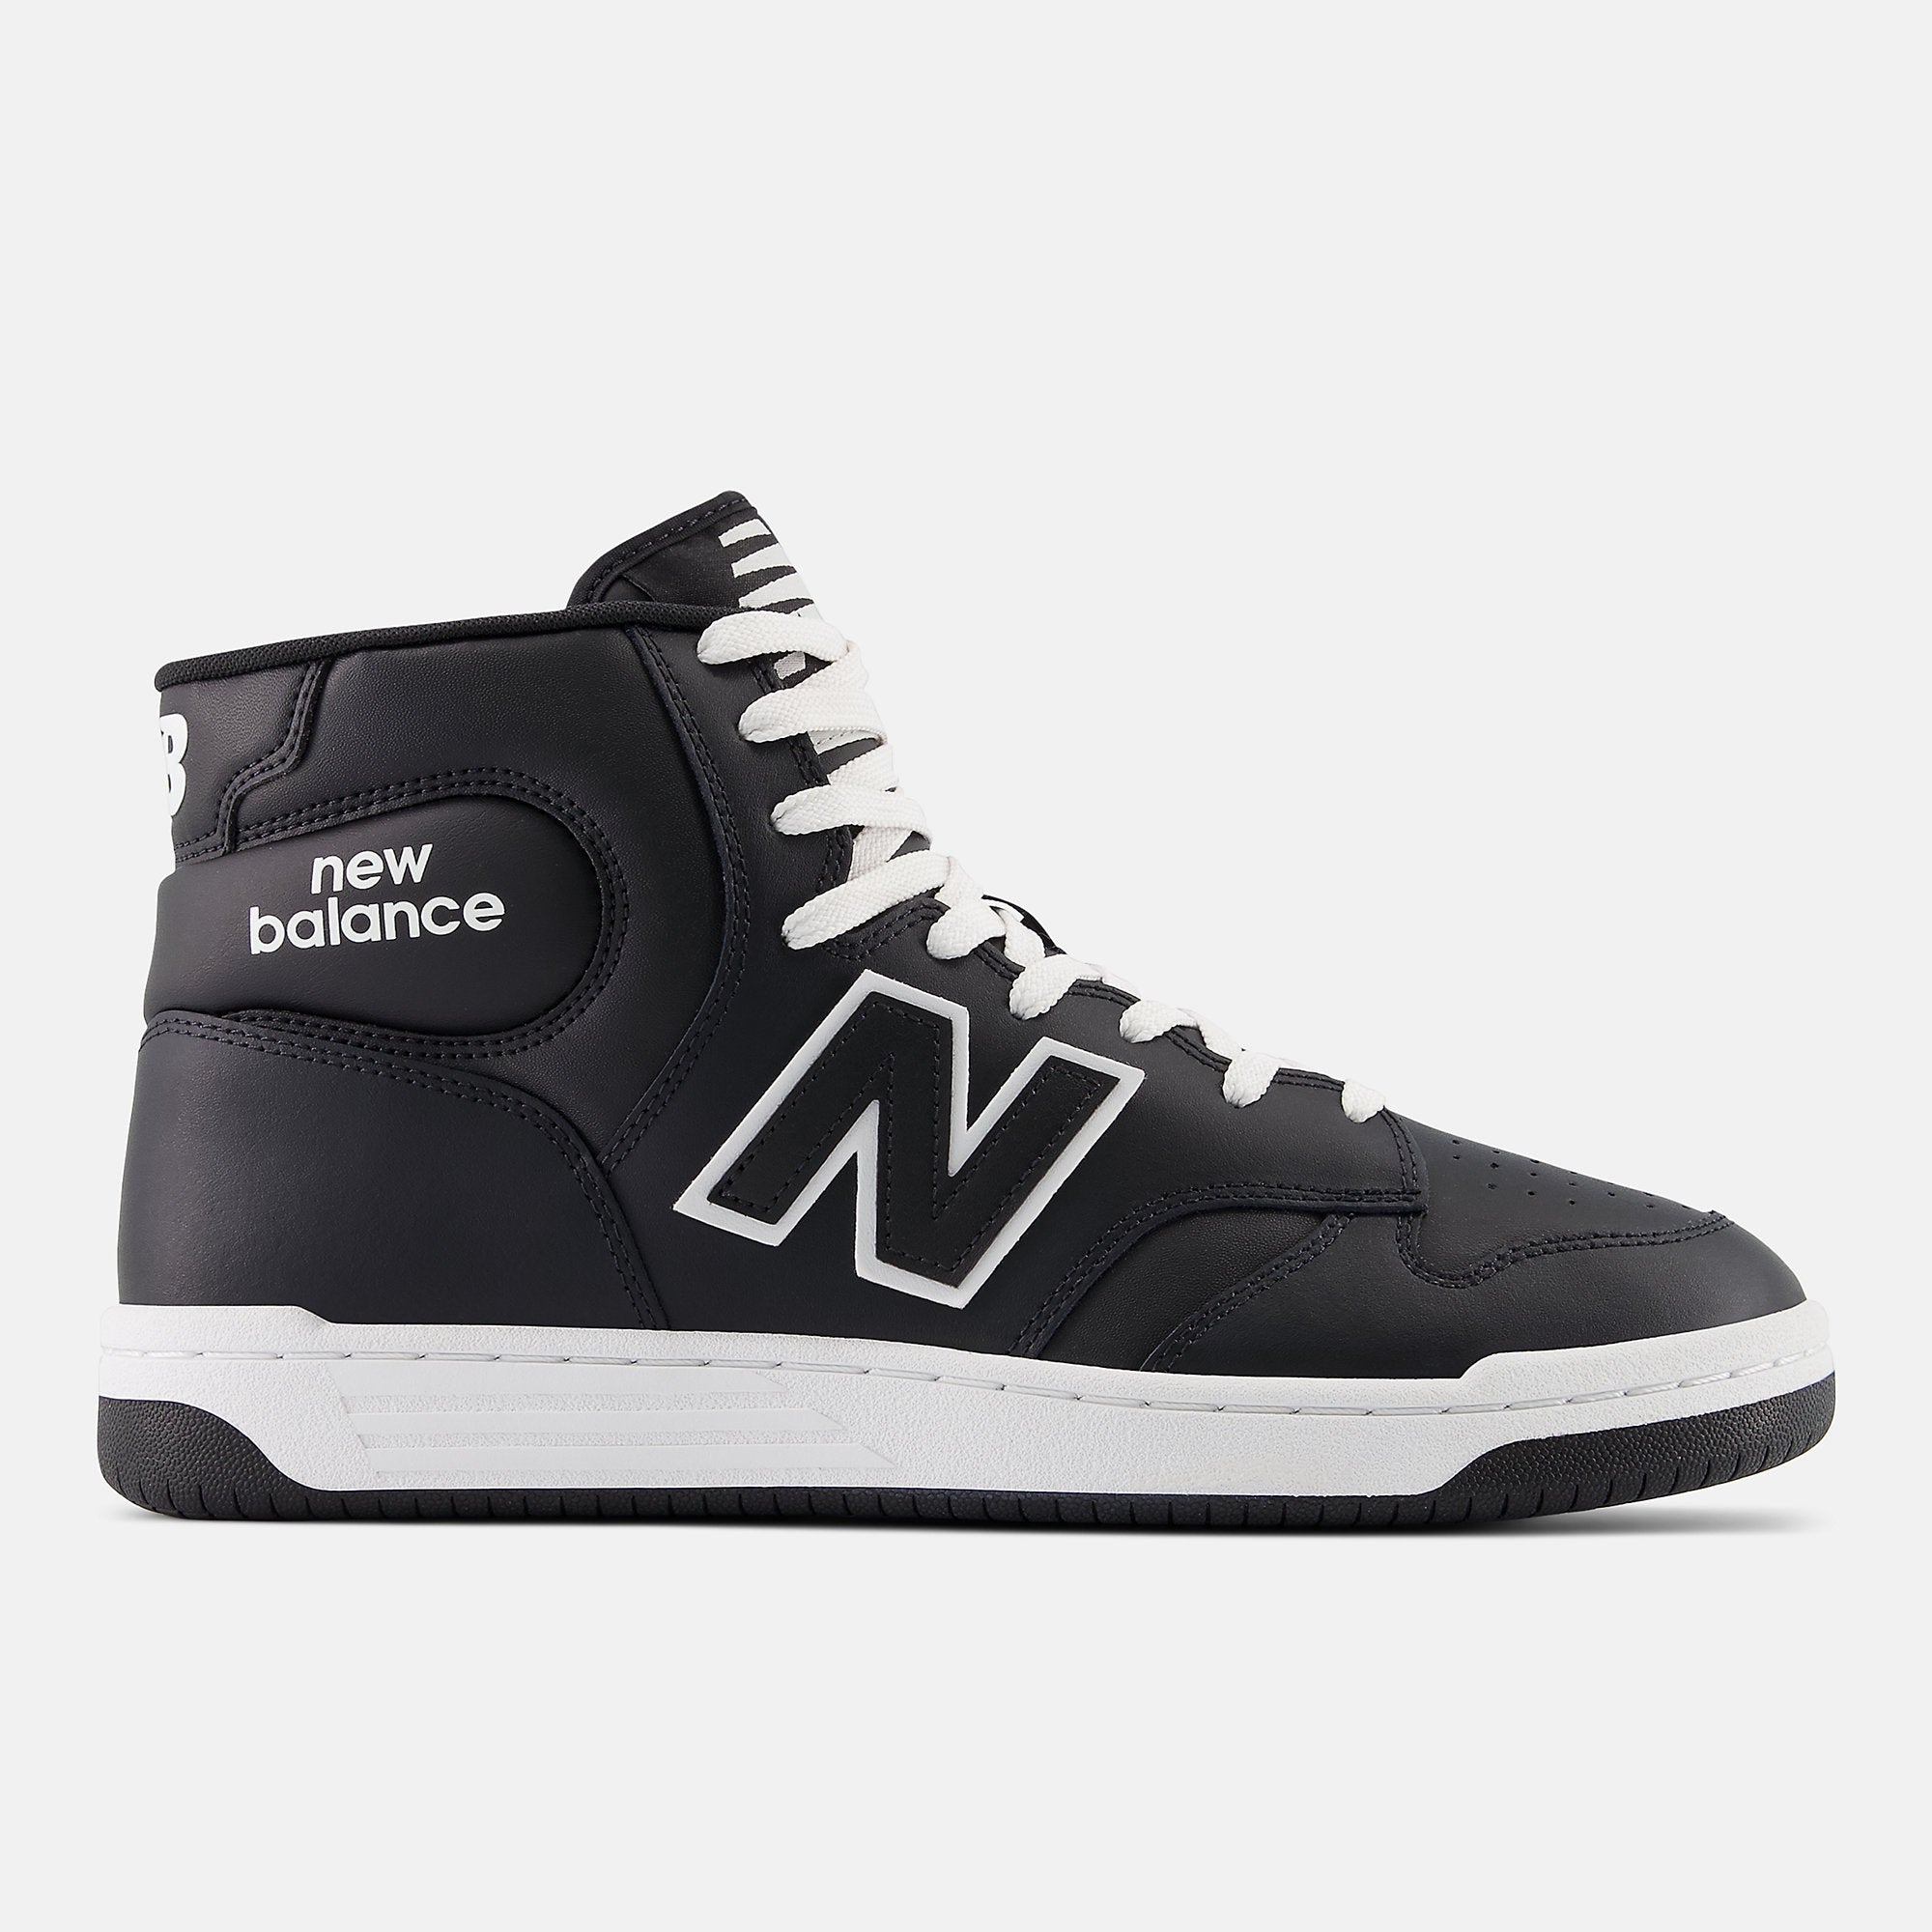 New Balance Mens Basket Ball Fashion High Top Trainers - Black / White